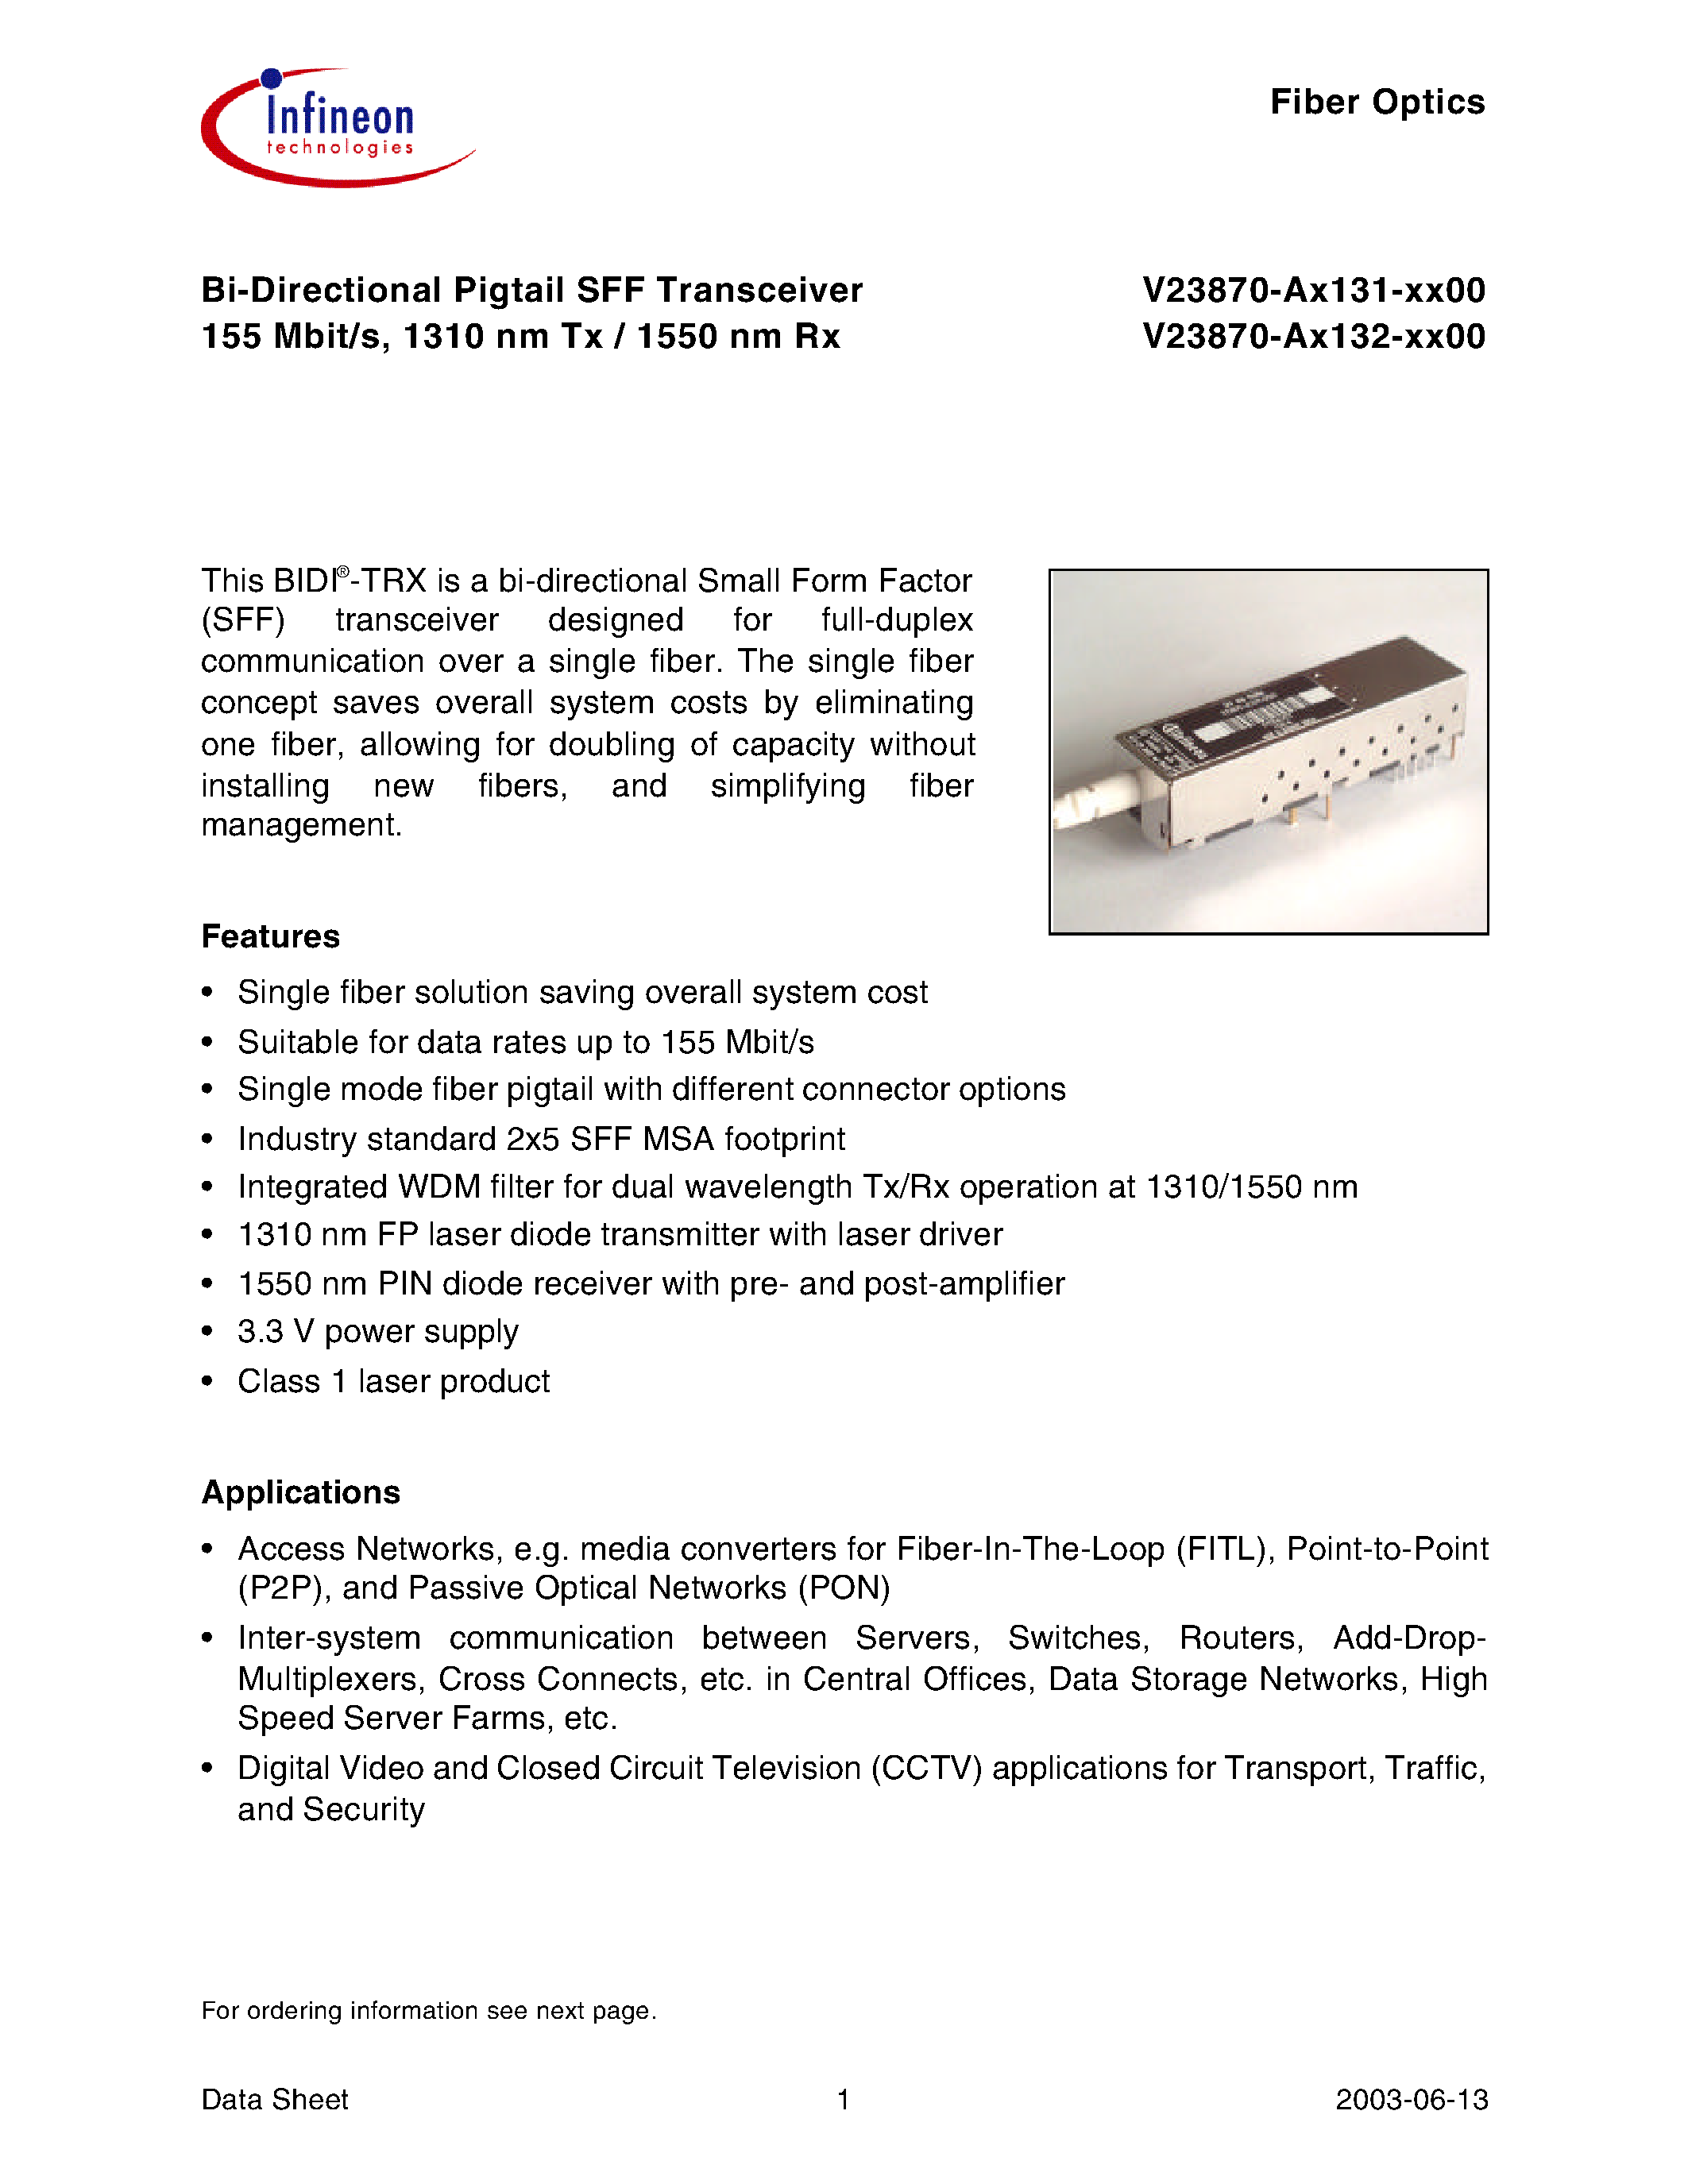 Даташит V23870-A3131-B200 - Bi-Directional Pigtail SFF Transceiver 155 Mbit/s/ 1310 nm Tx / 1550 nm Rx страница 1